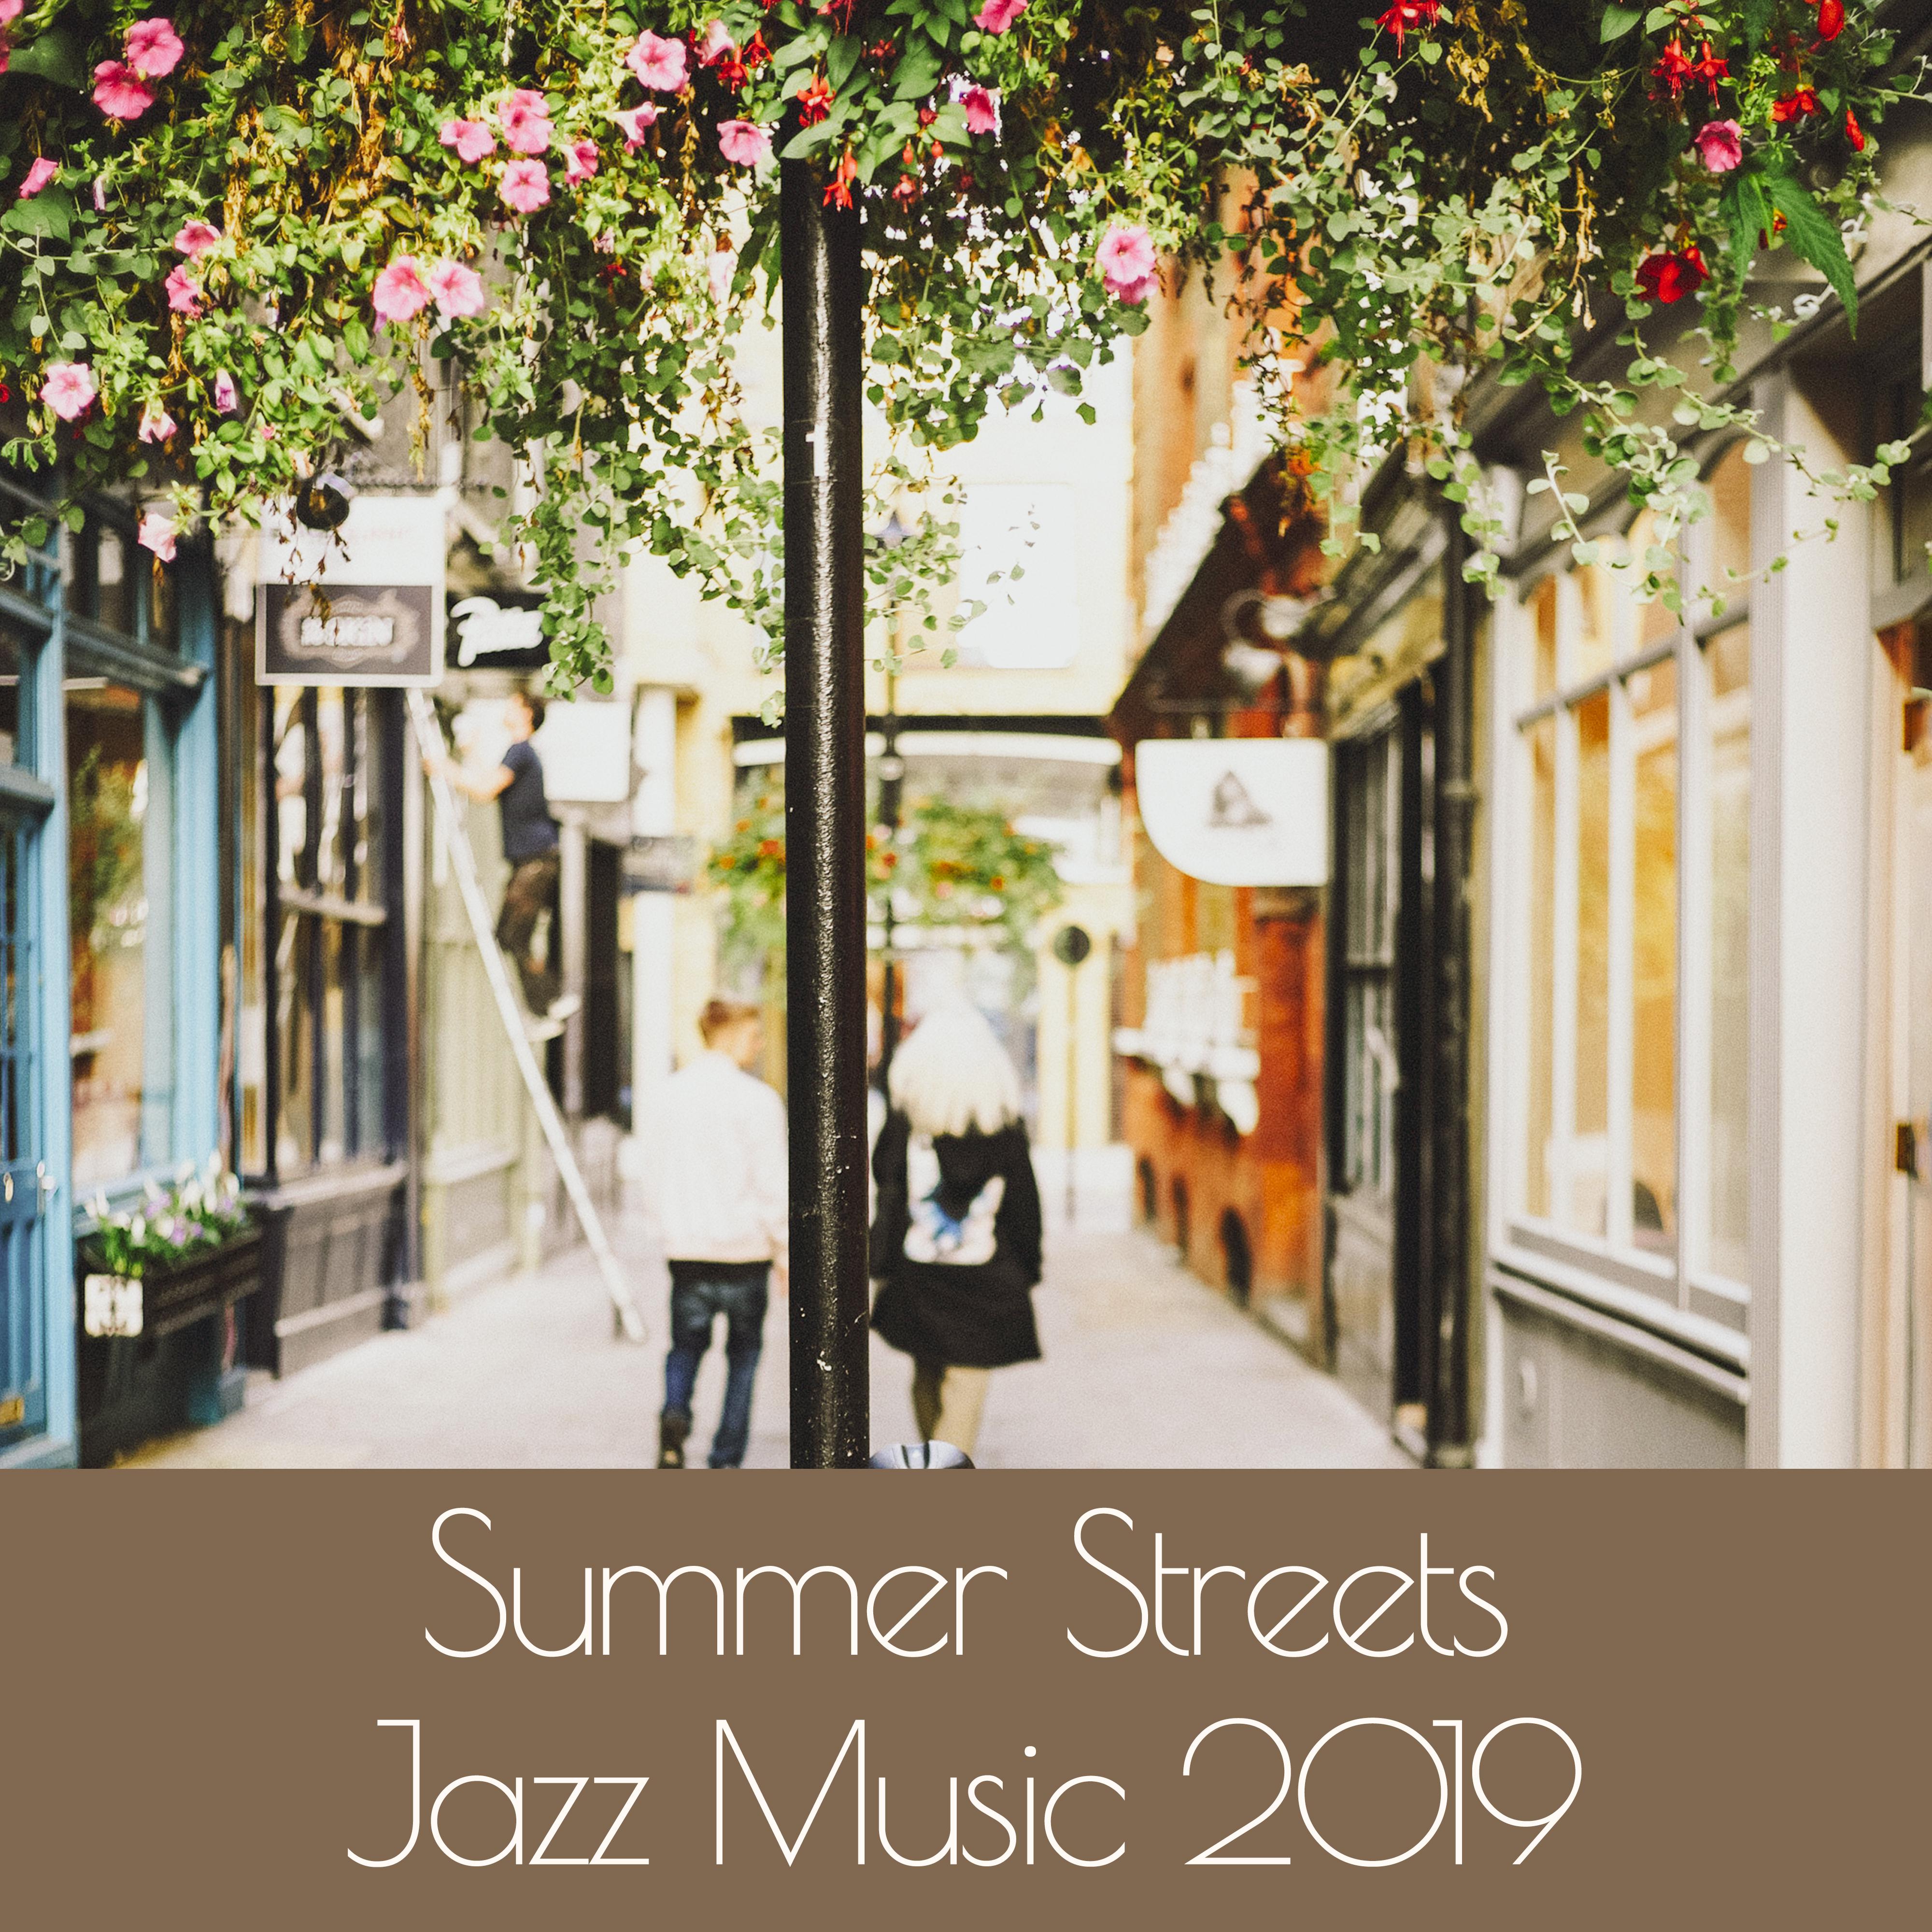 Summer Streets Jazz Music 2019